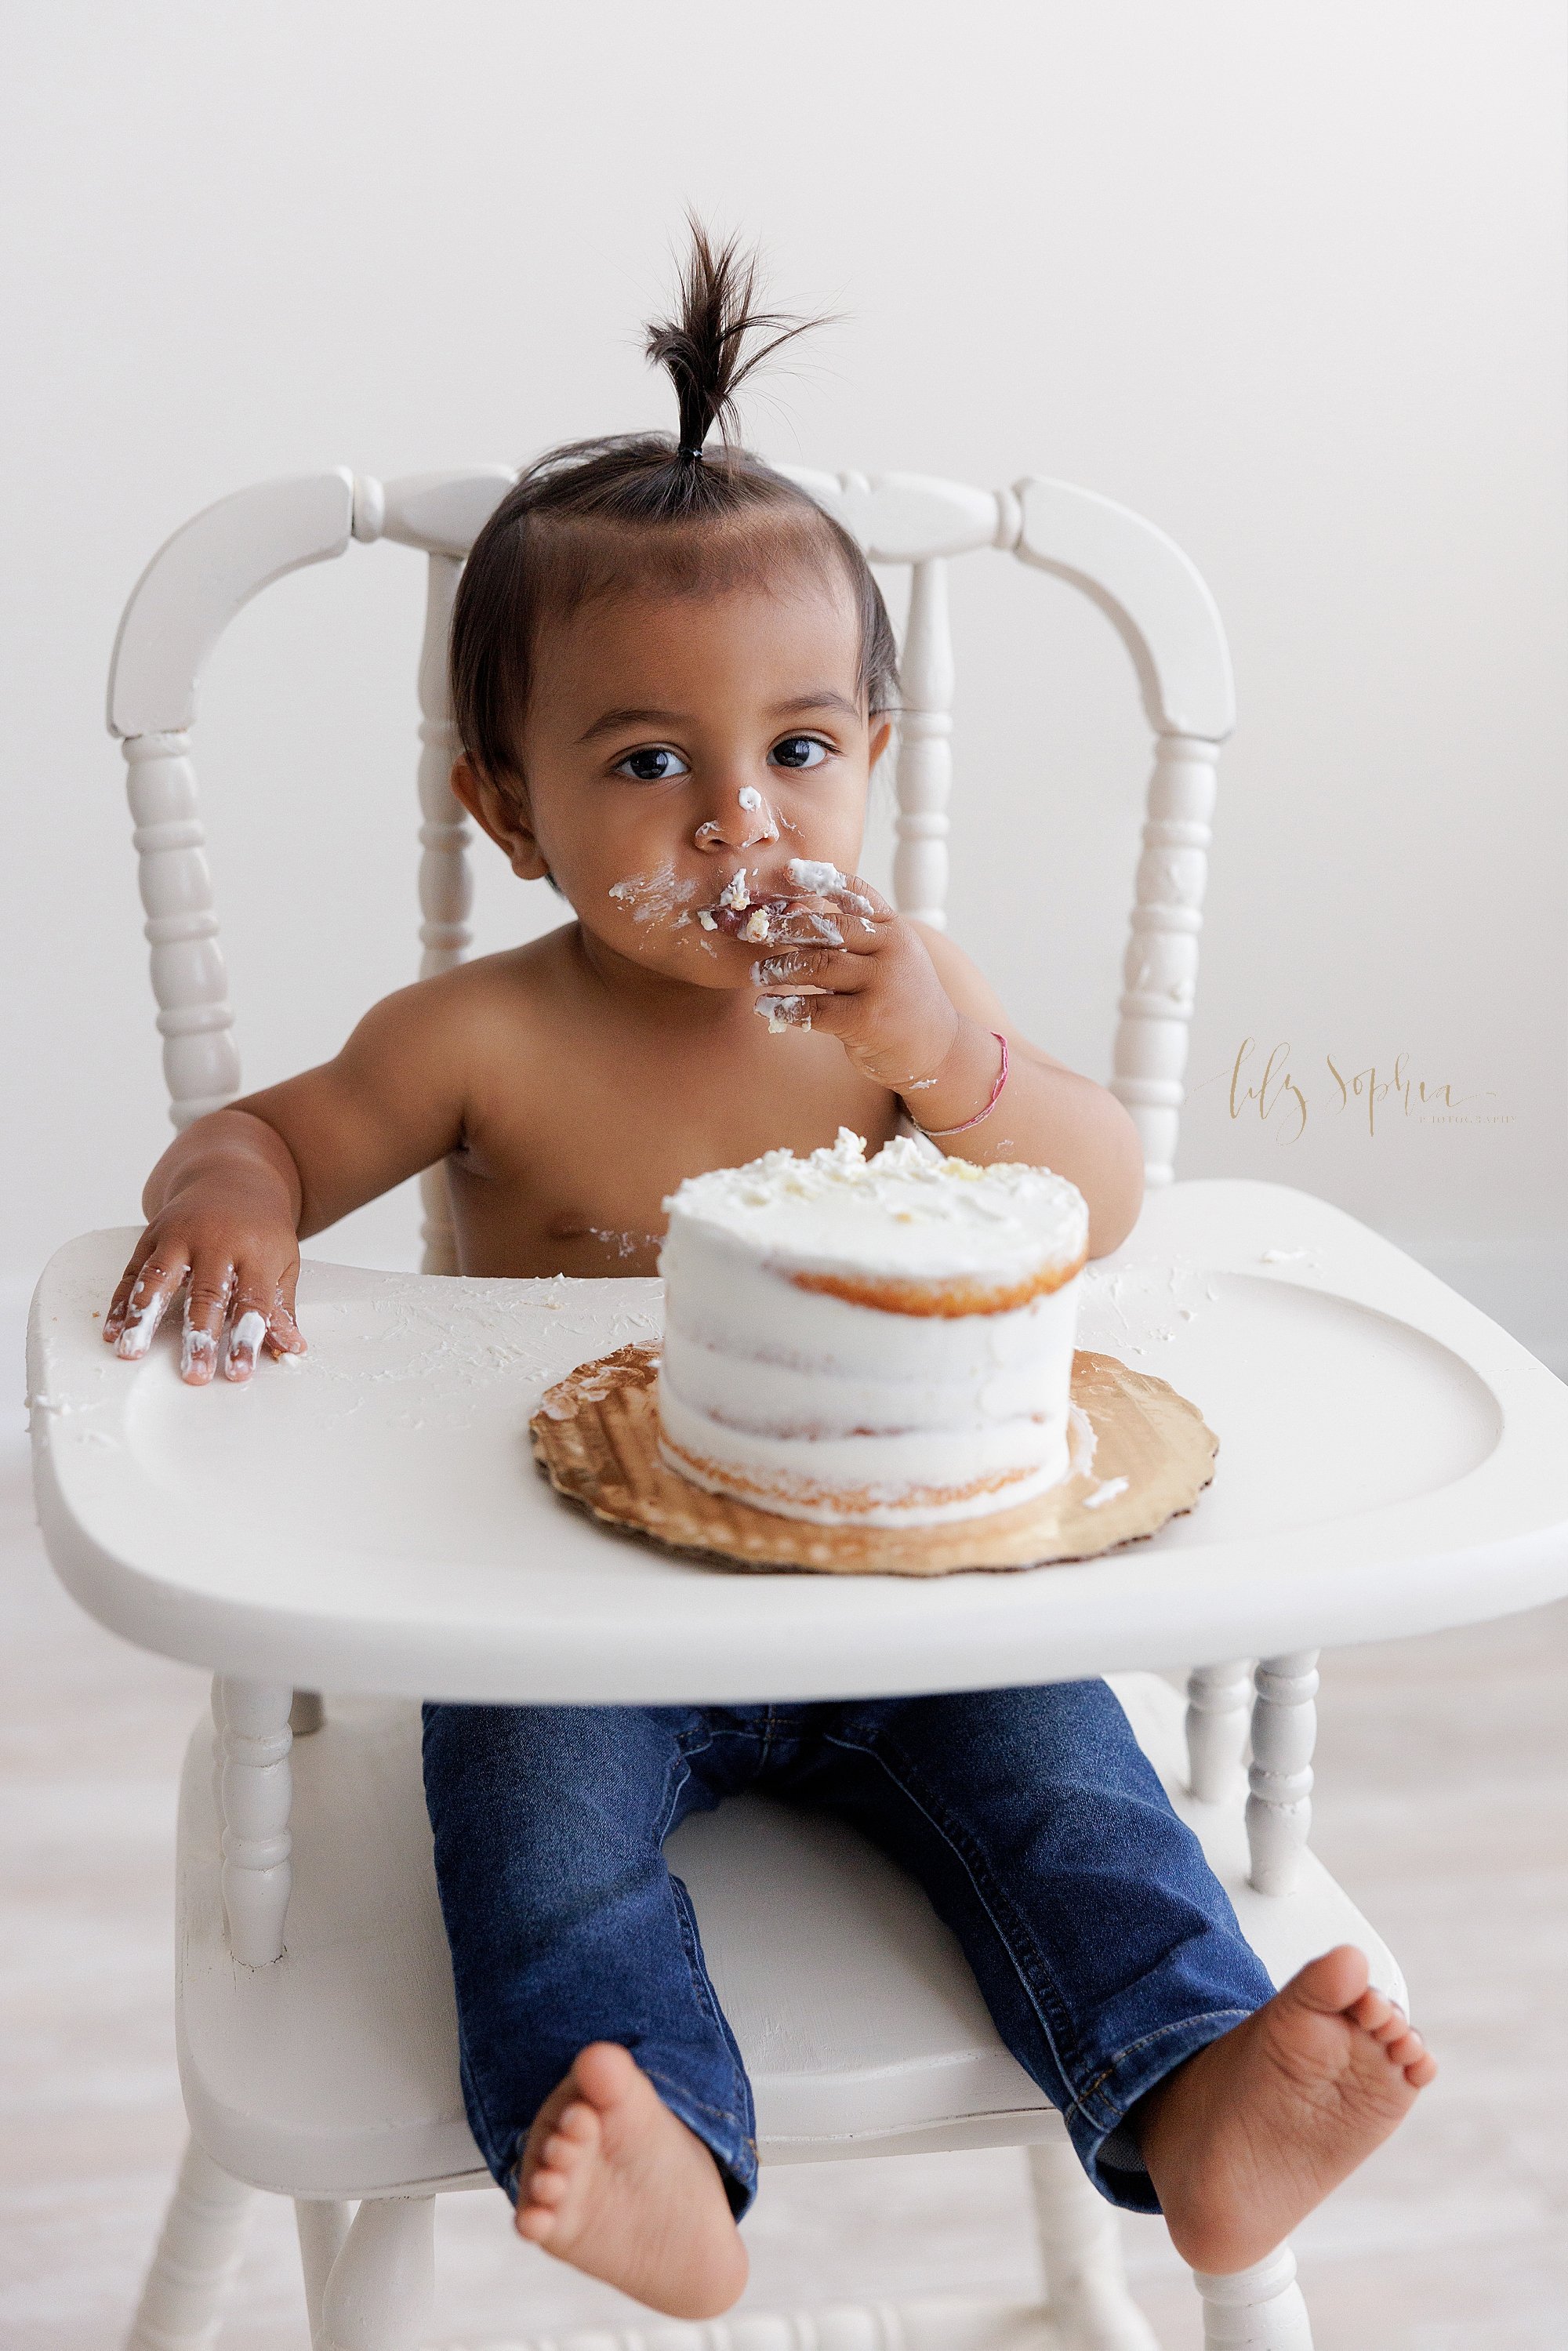 intown-atlanta-decatur-brookhaven-buckhead-first-birthday-cake-smash-family-photoshoot-baby-boy_5444.jpg